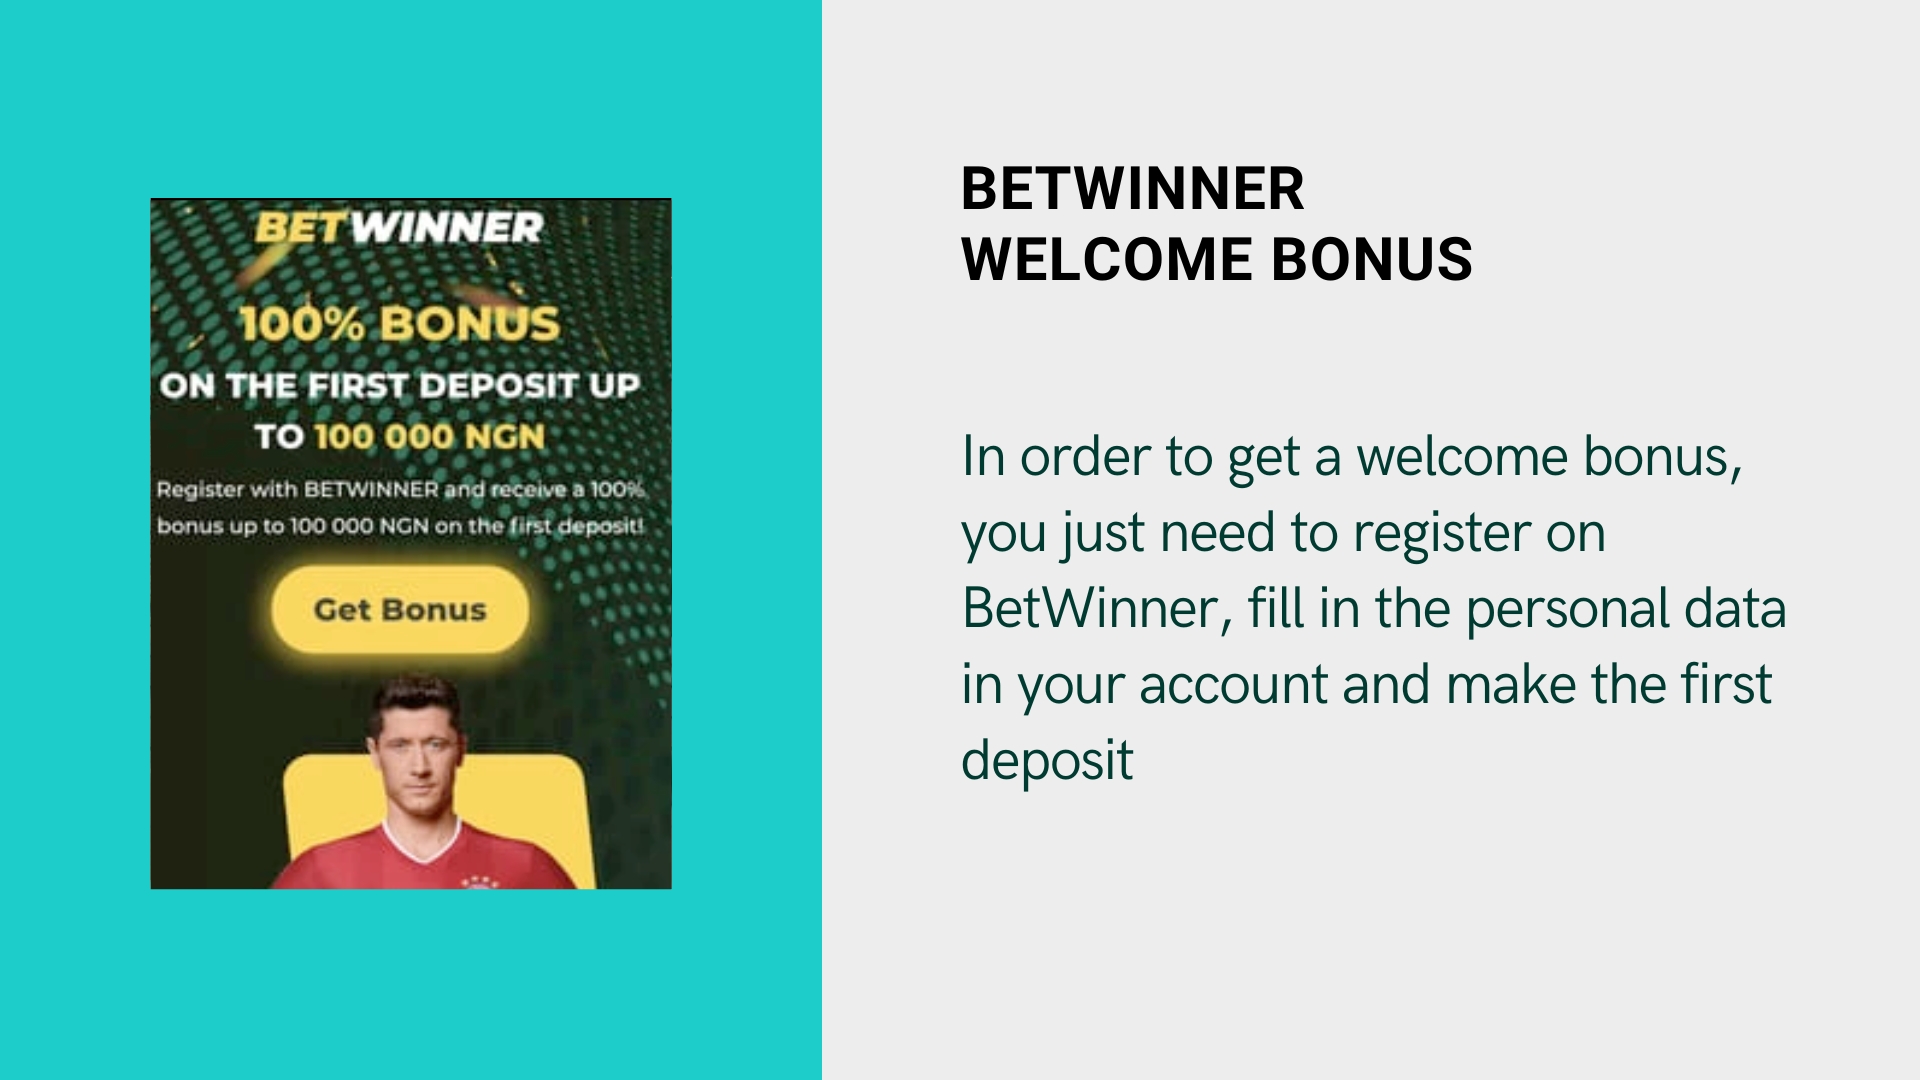 Betwinner Welcome bonus